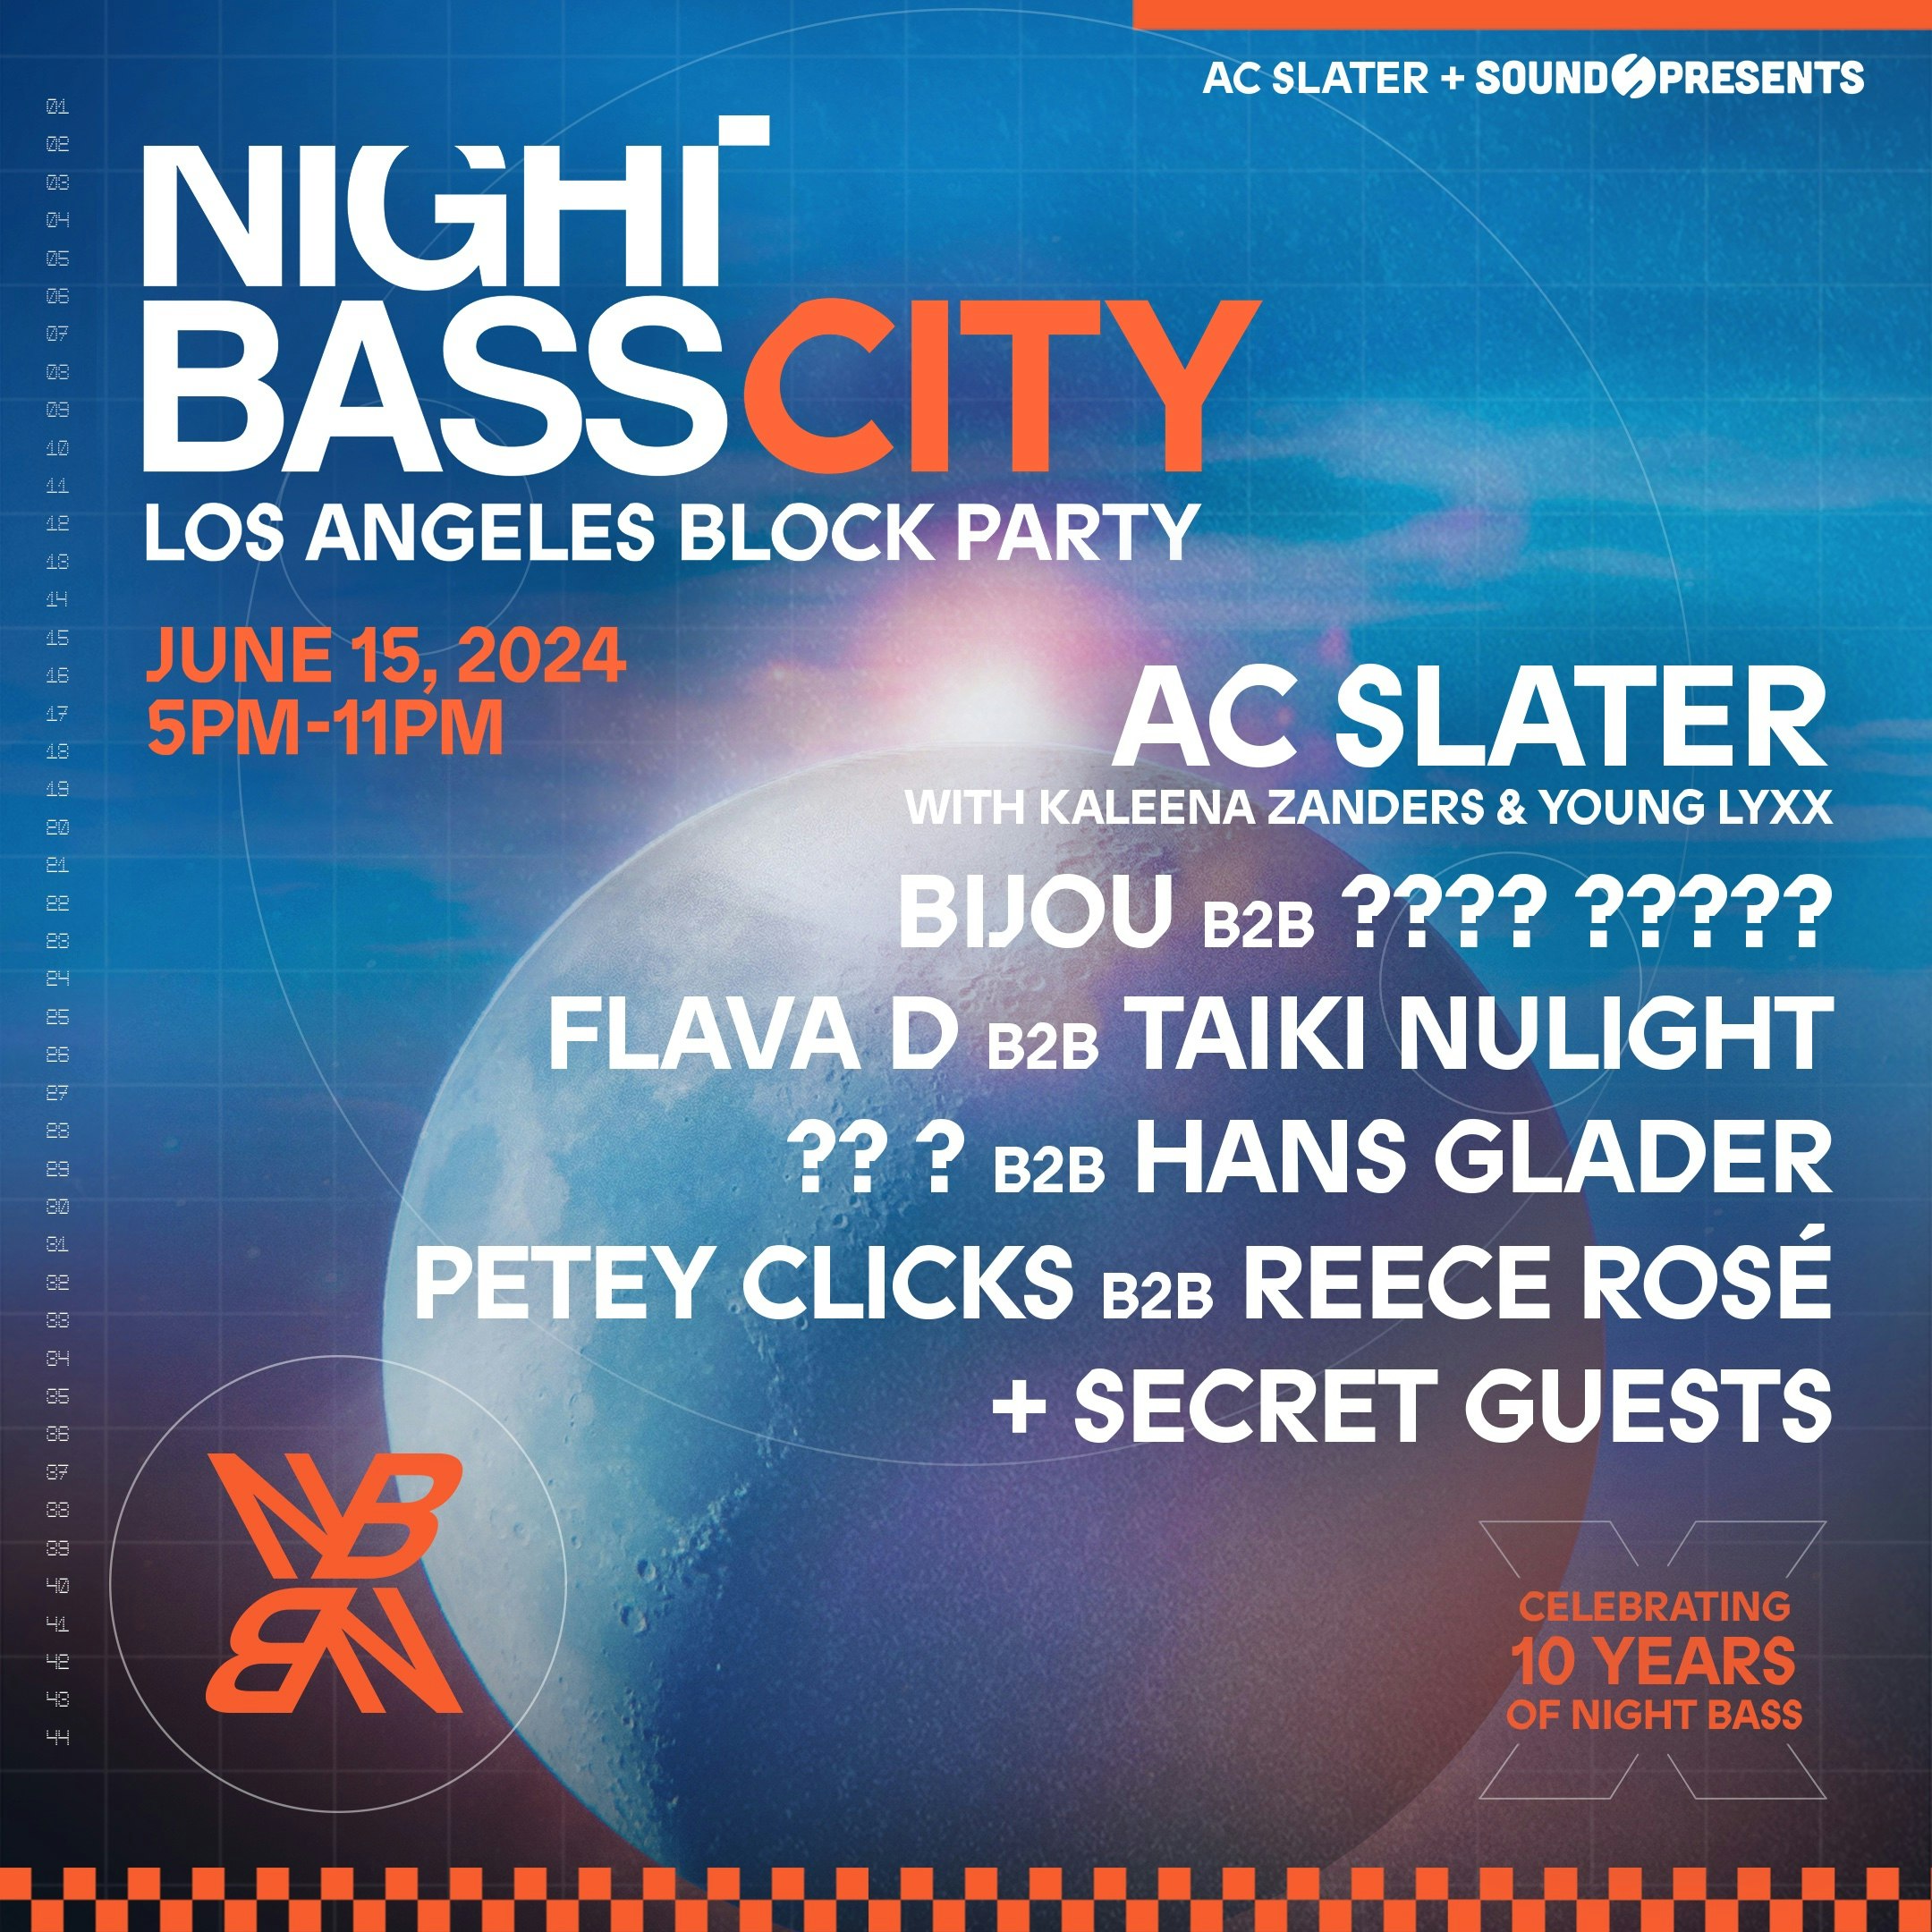 Sound & Night Bass present: Night Bass City – Los Angeles Block 